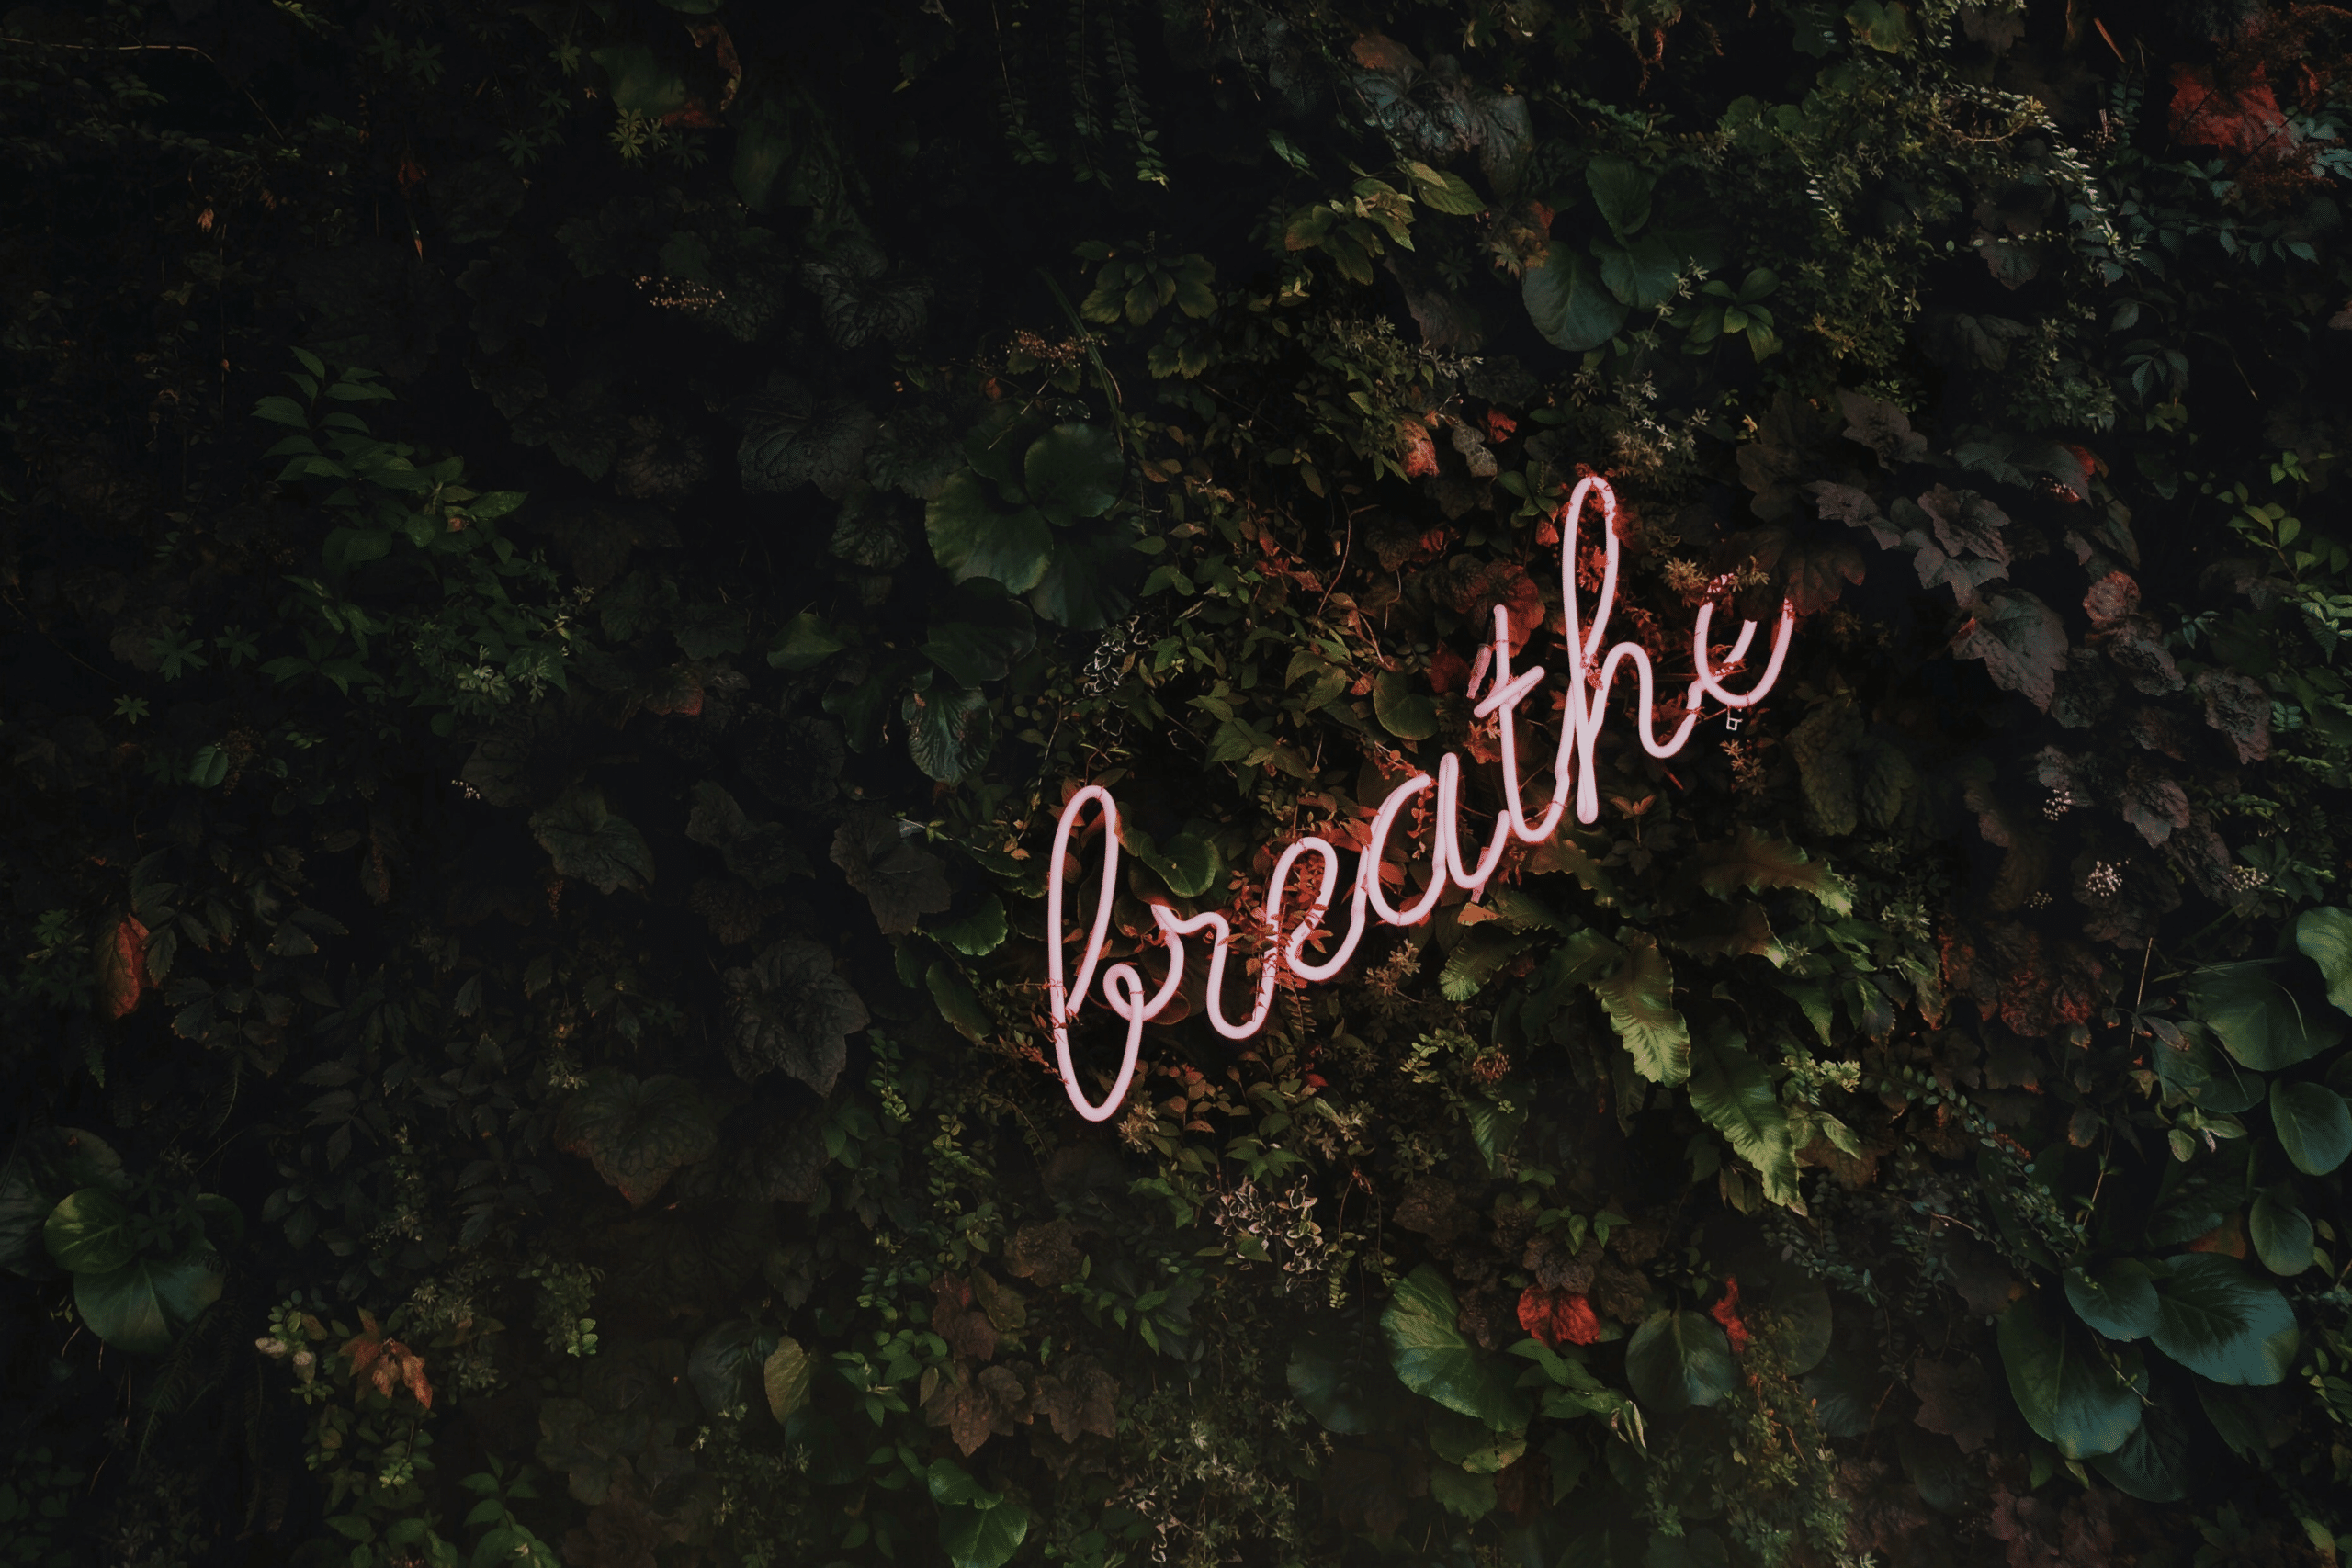 Breathe sign hidden in foliage